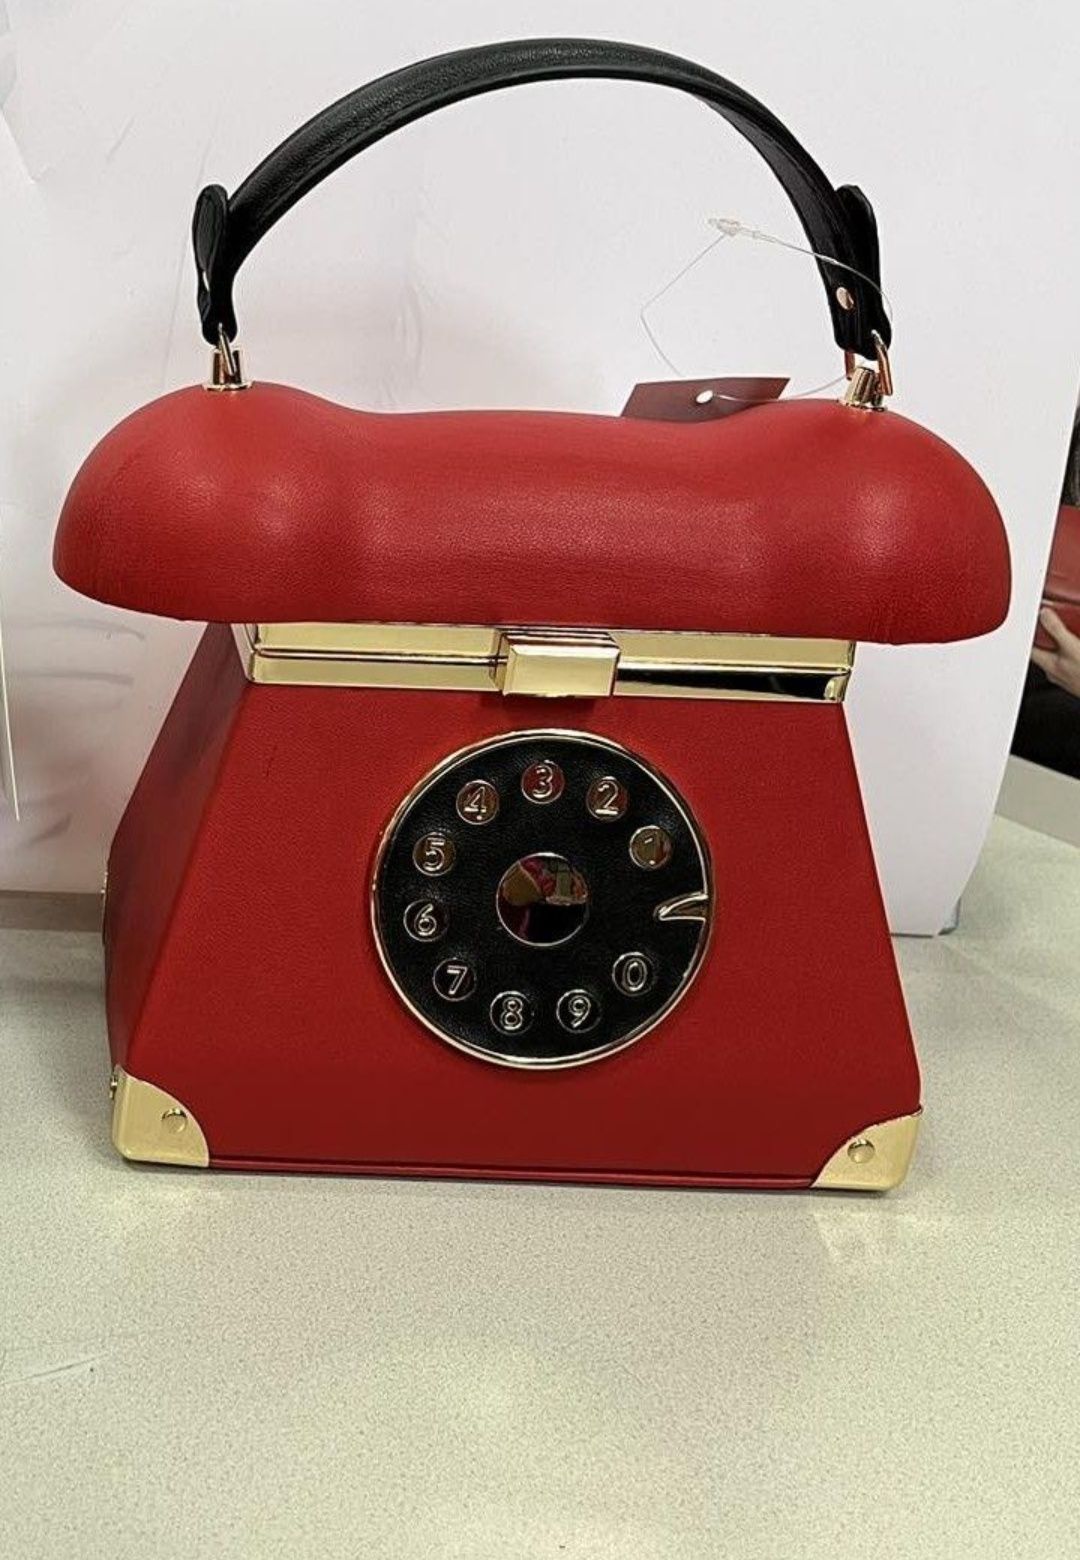 Torebka/kuferek telefon czerwony